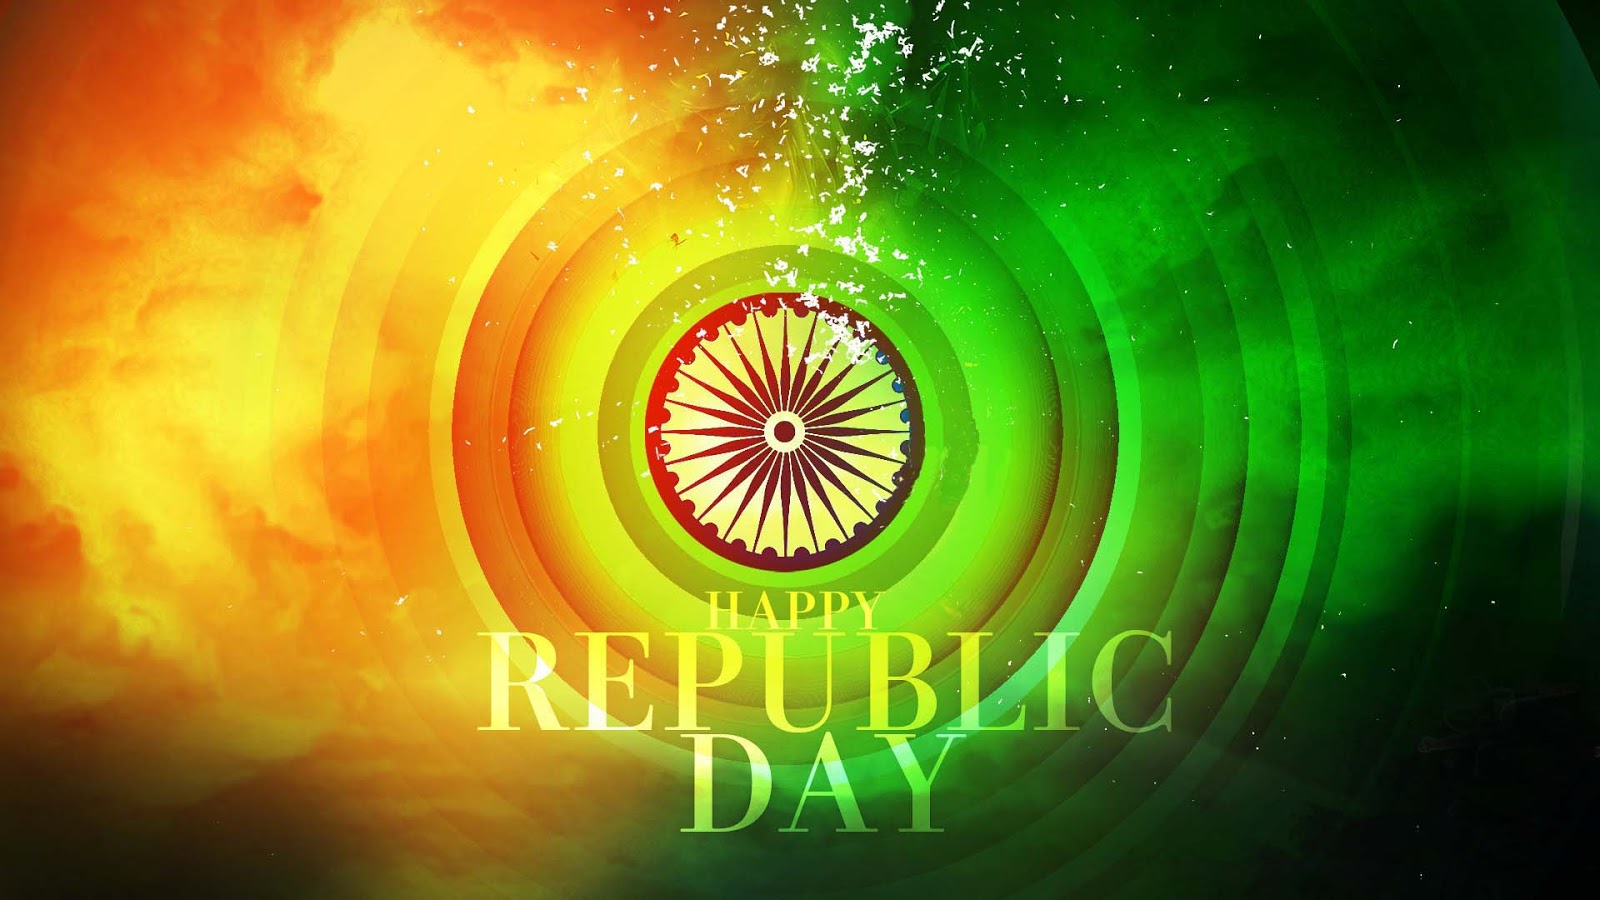 Happy Republic Day Images Full Hd Wallpaper Wallpaper